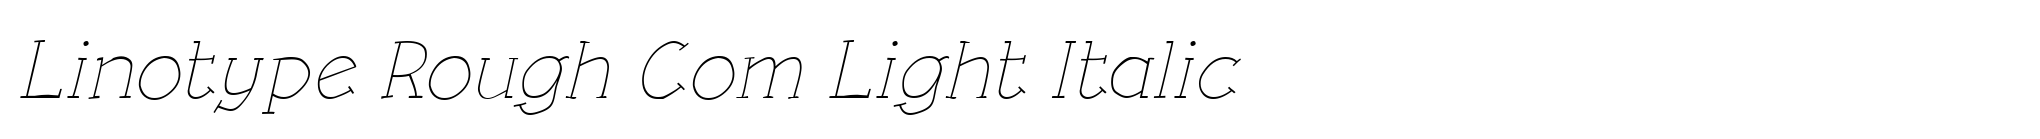 Linotype Rough Com Light Italic image